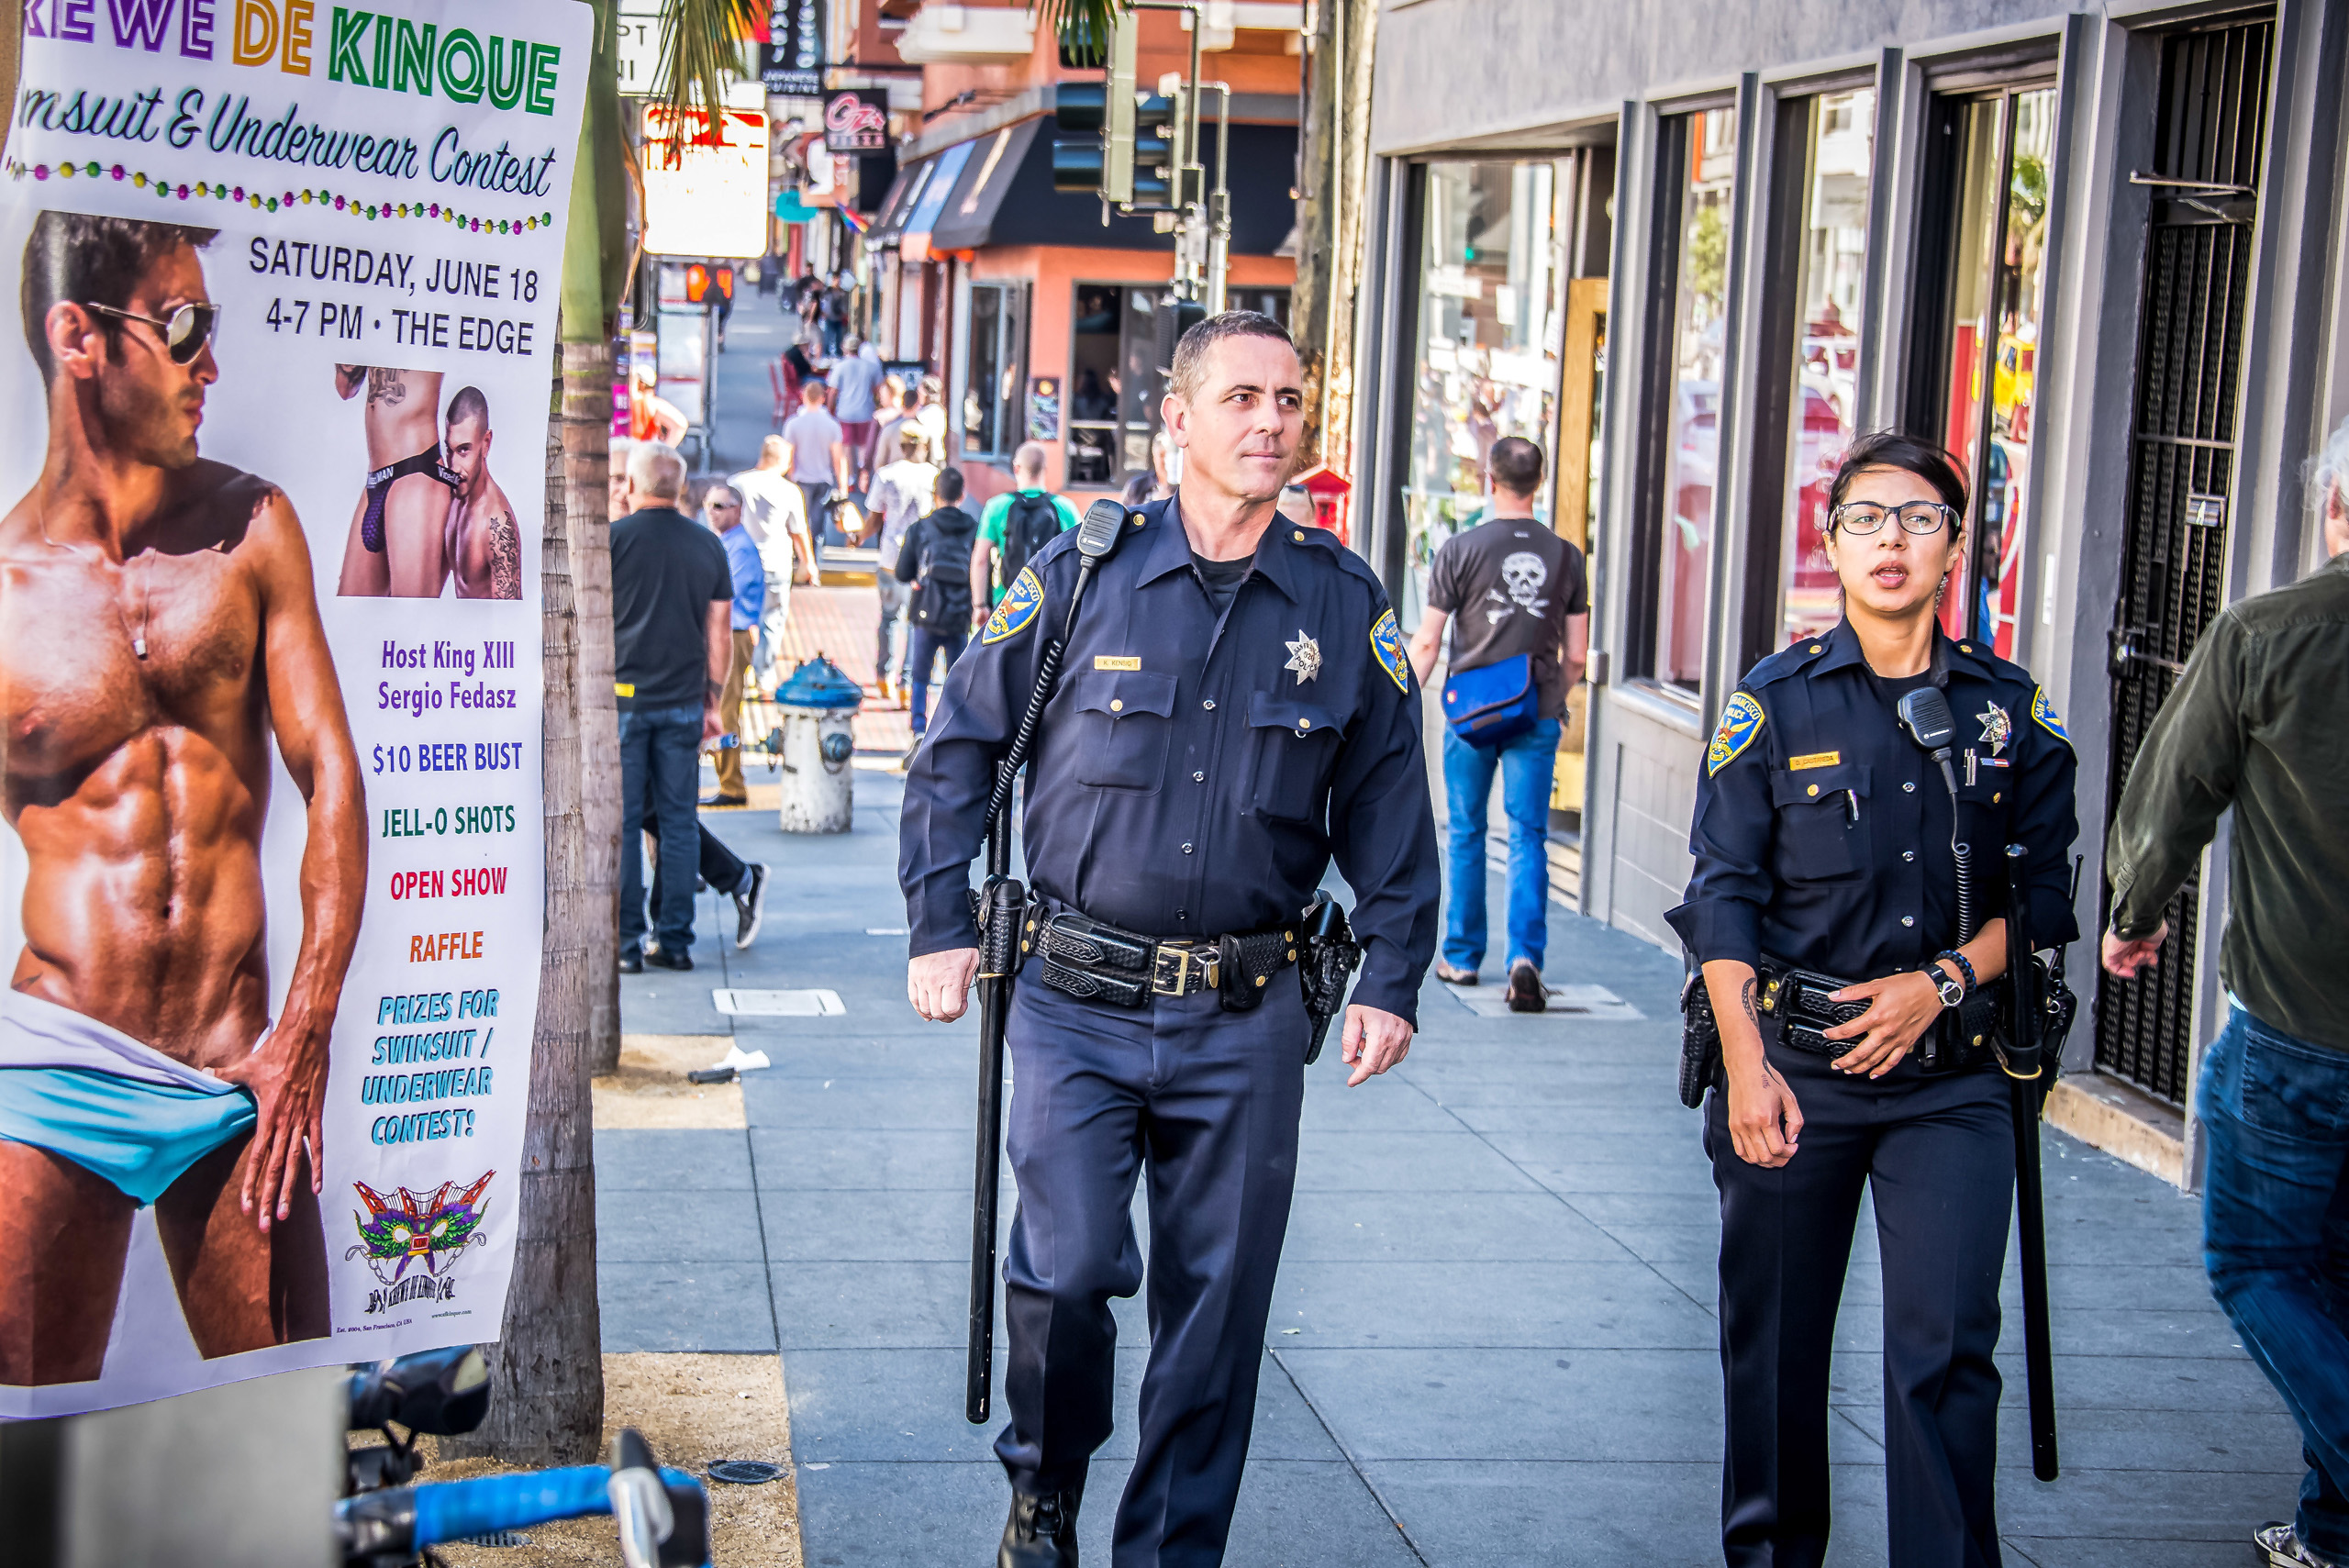 SFPD Officers patrol Castro Street on June 18, 2016, in San